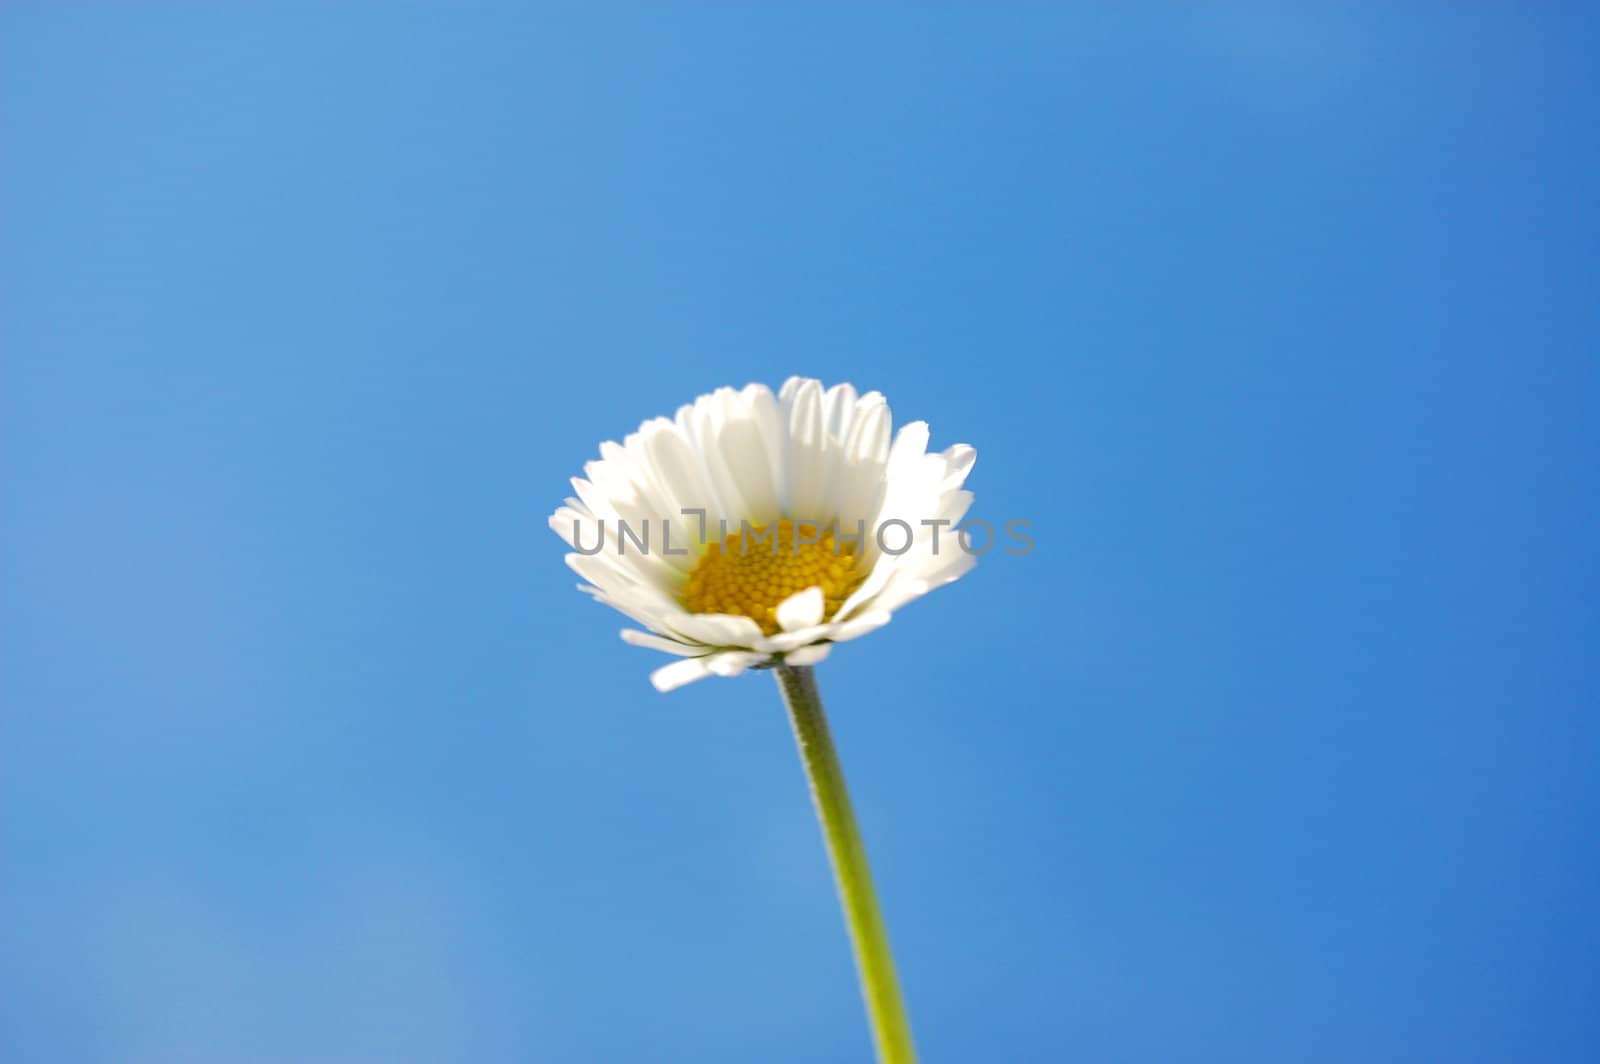 daisy under blue spring sky by gunnar3000